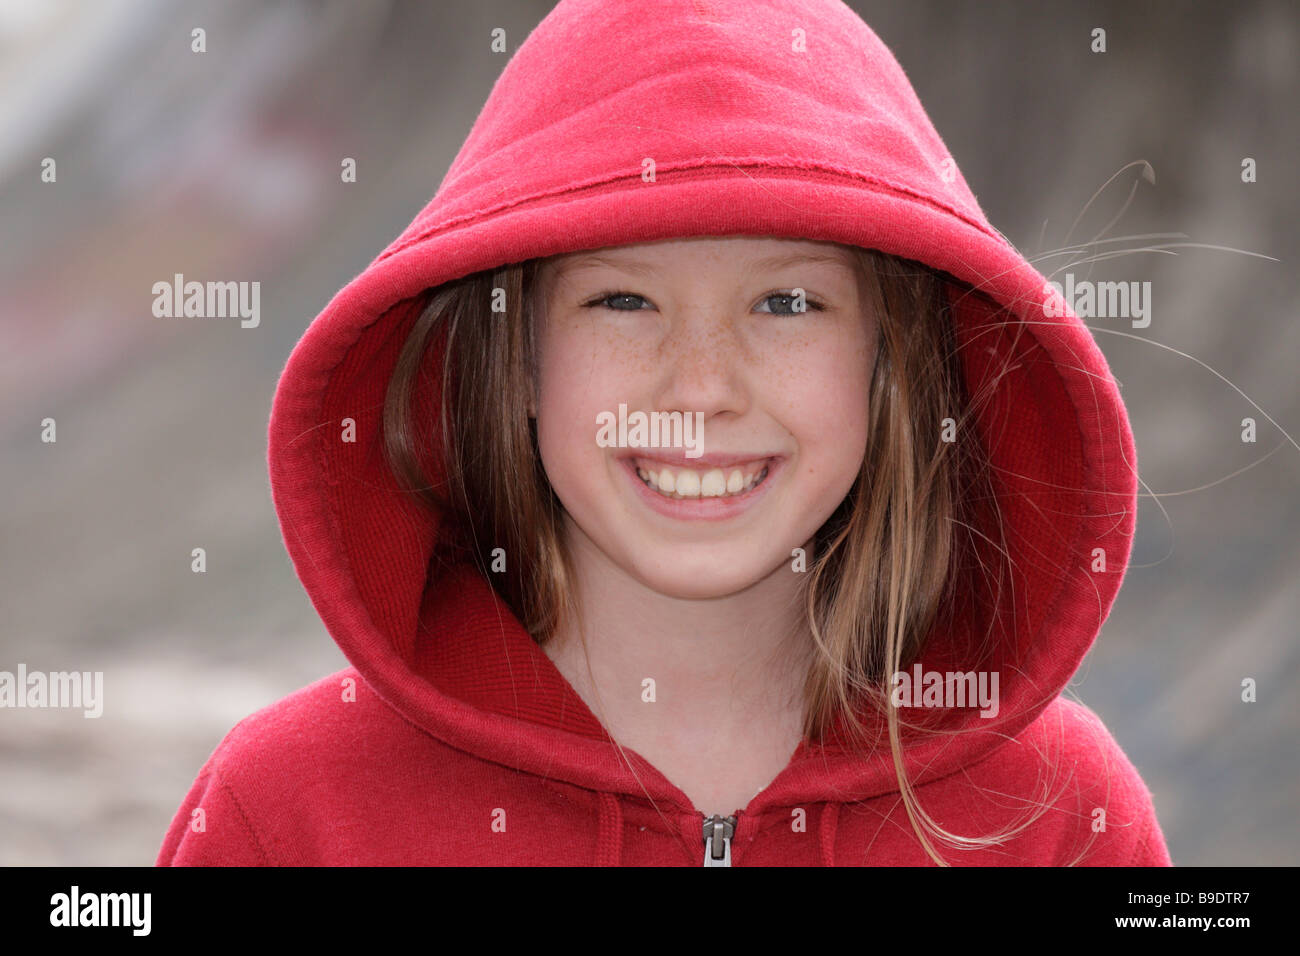 Ten Year Old Girl Stock Photos & Ten Year Old Girl Stock Images - Alamy